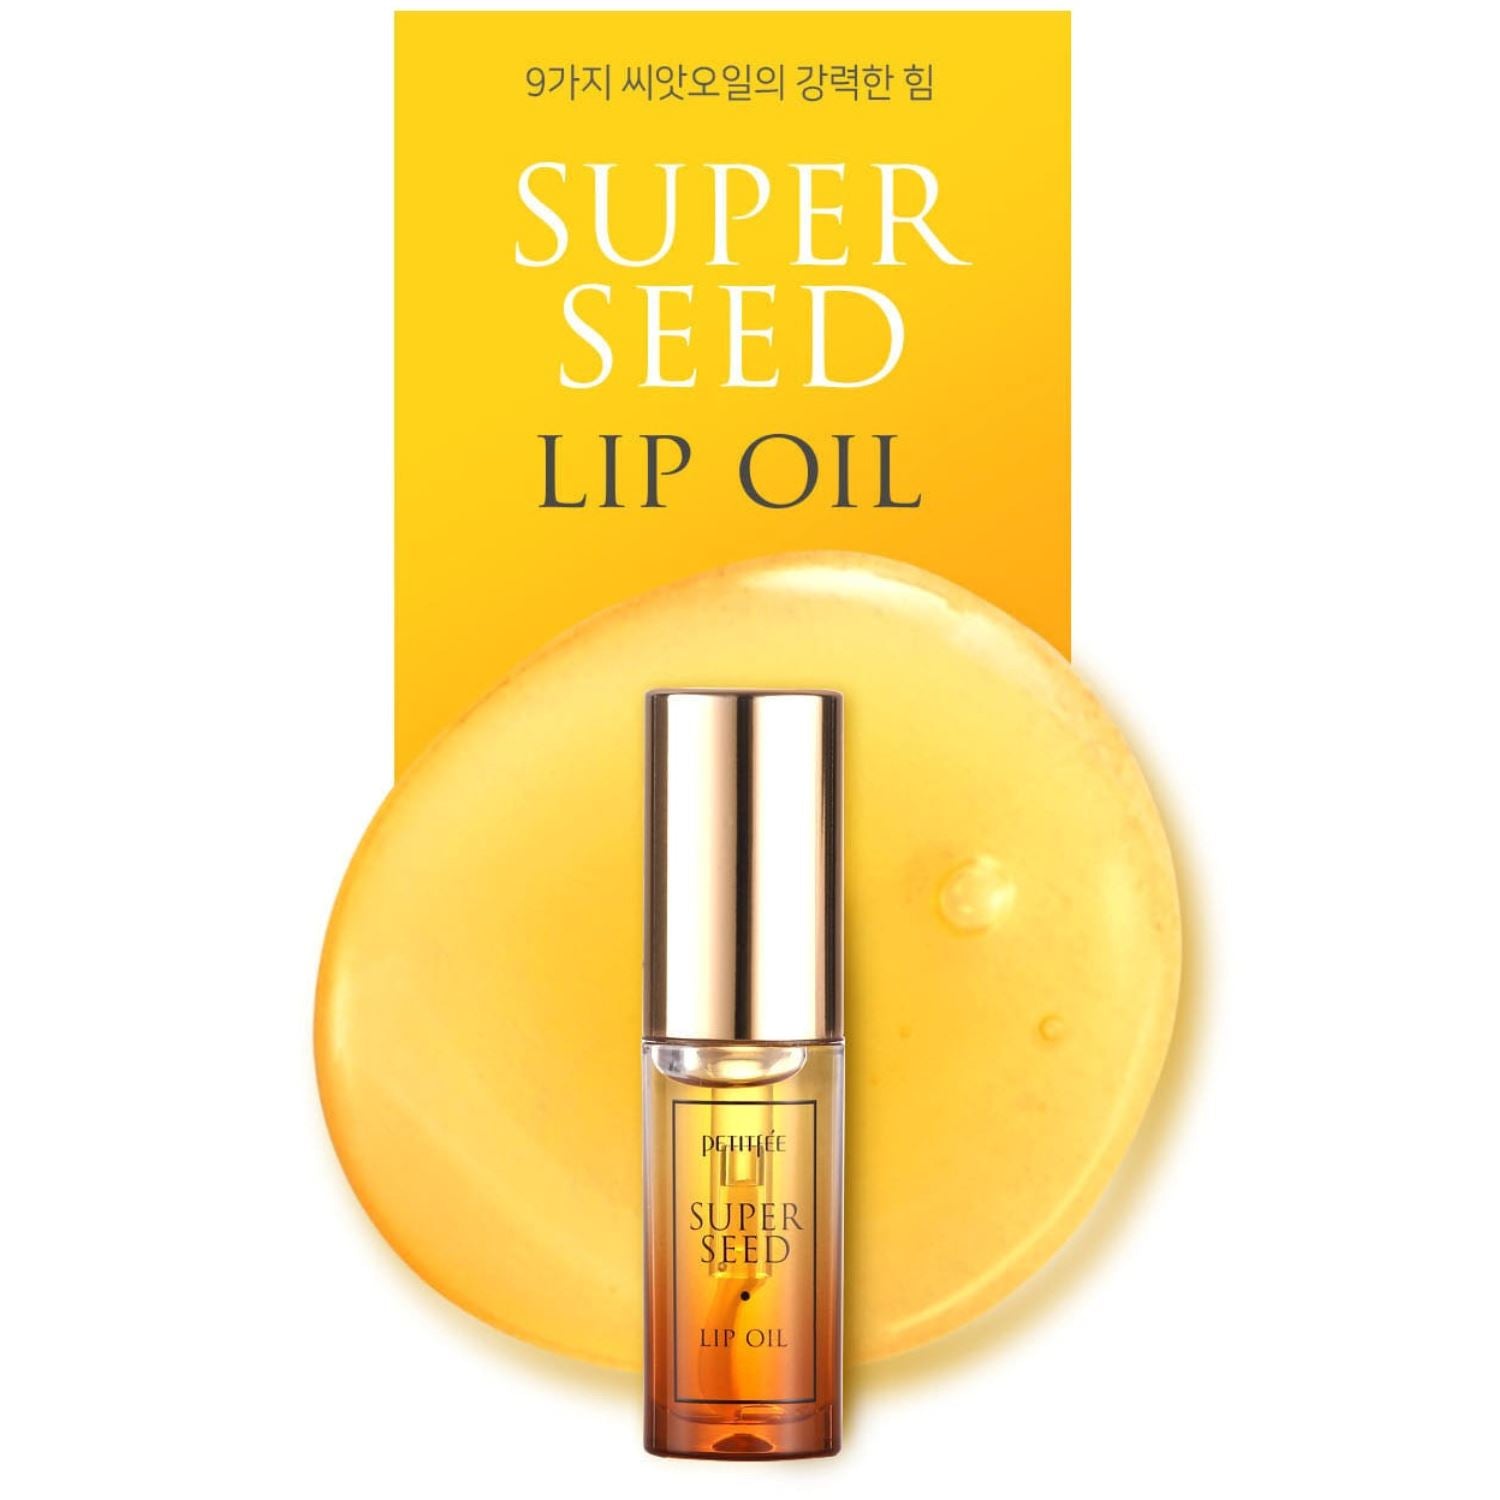 Petitfee Super Seed Lip Oil 3g Skin Care Petitfee ORION XO Sri Lanka